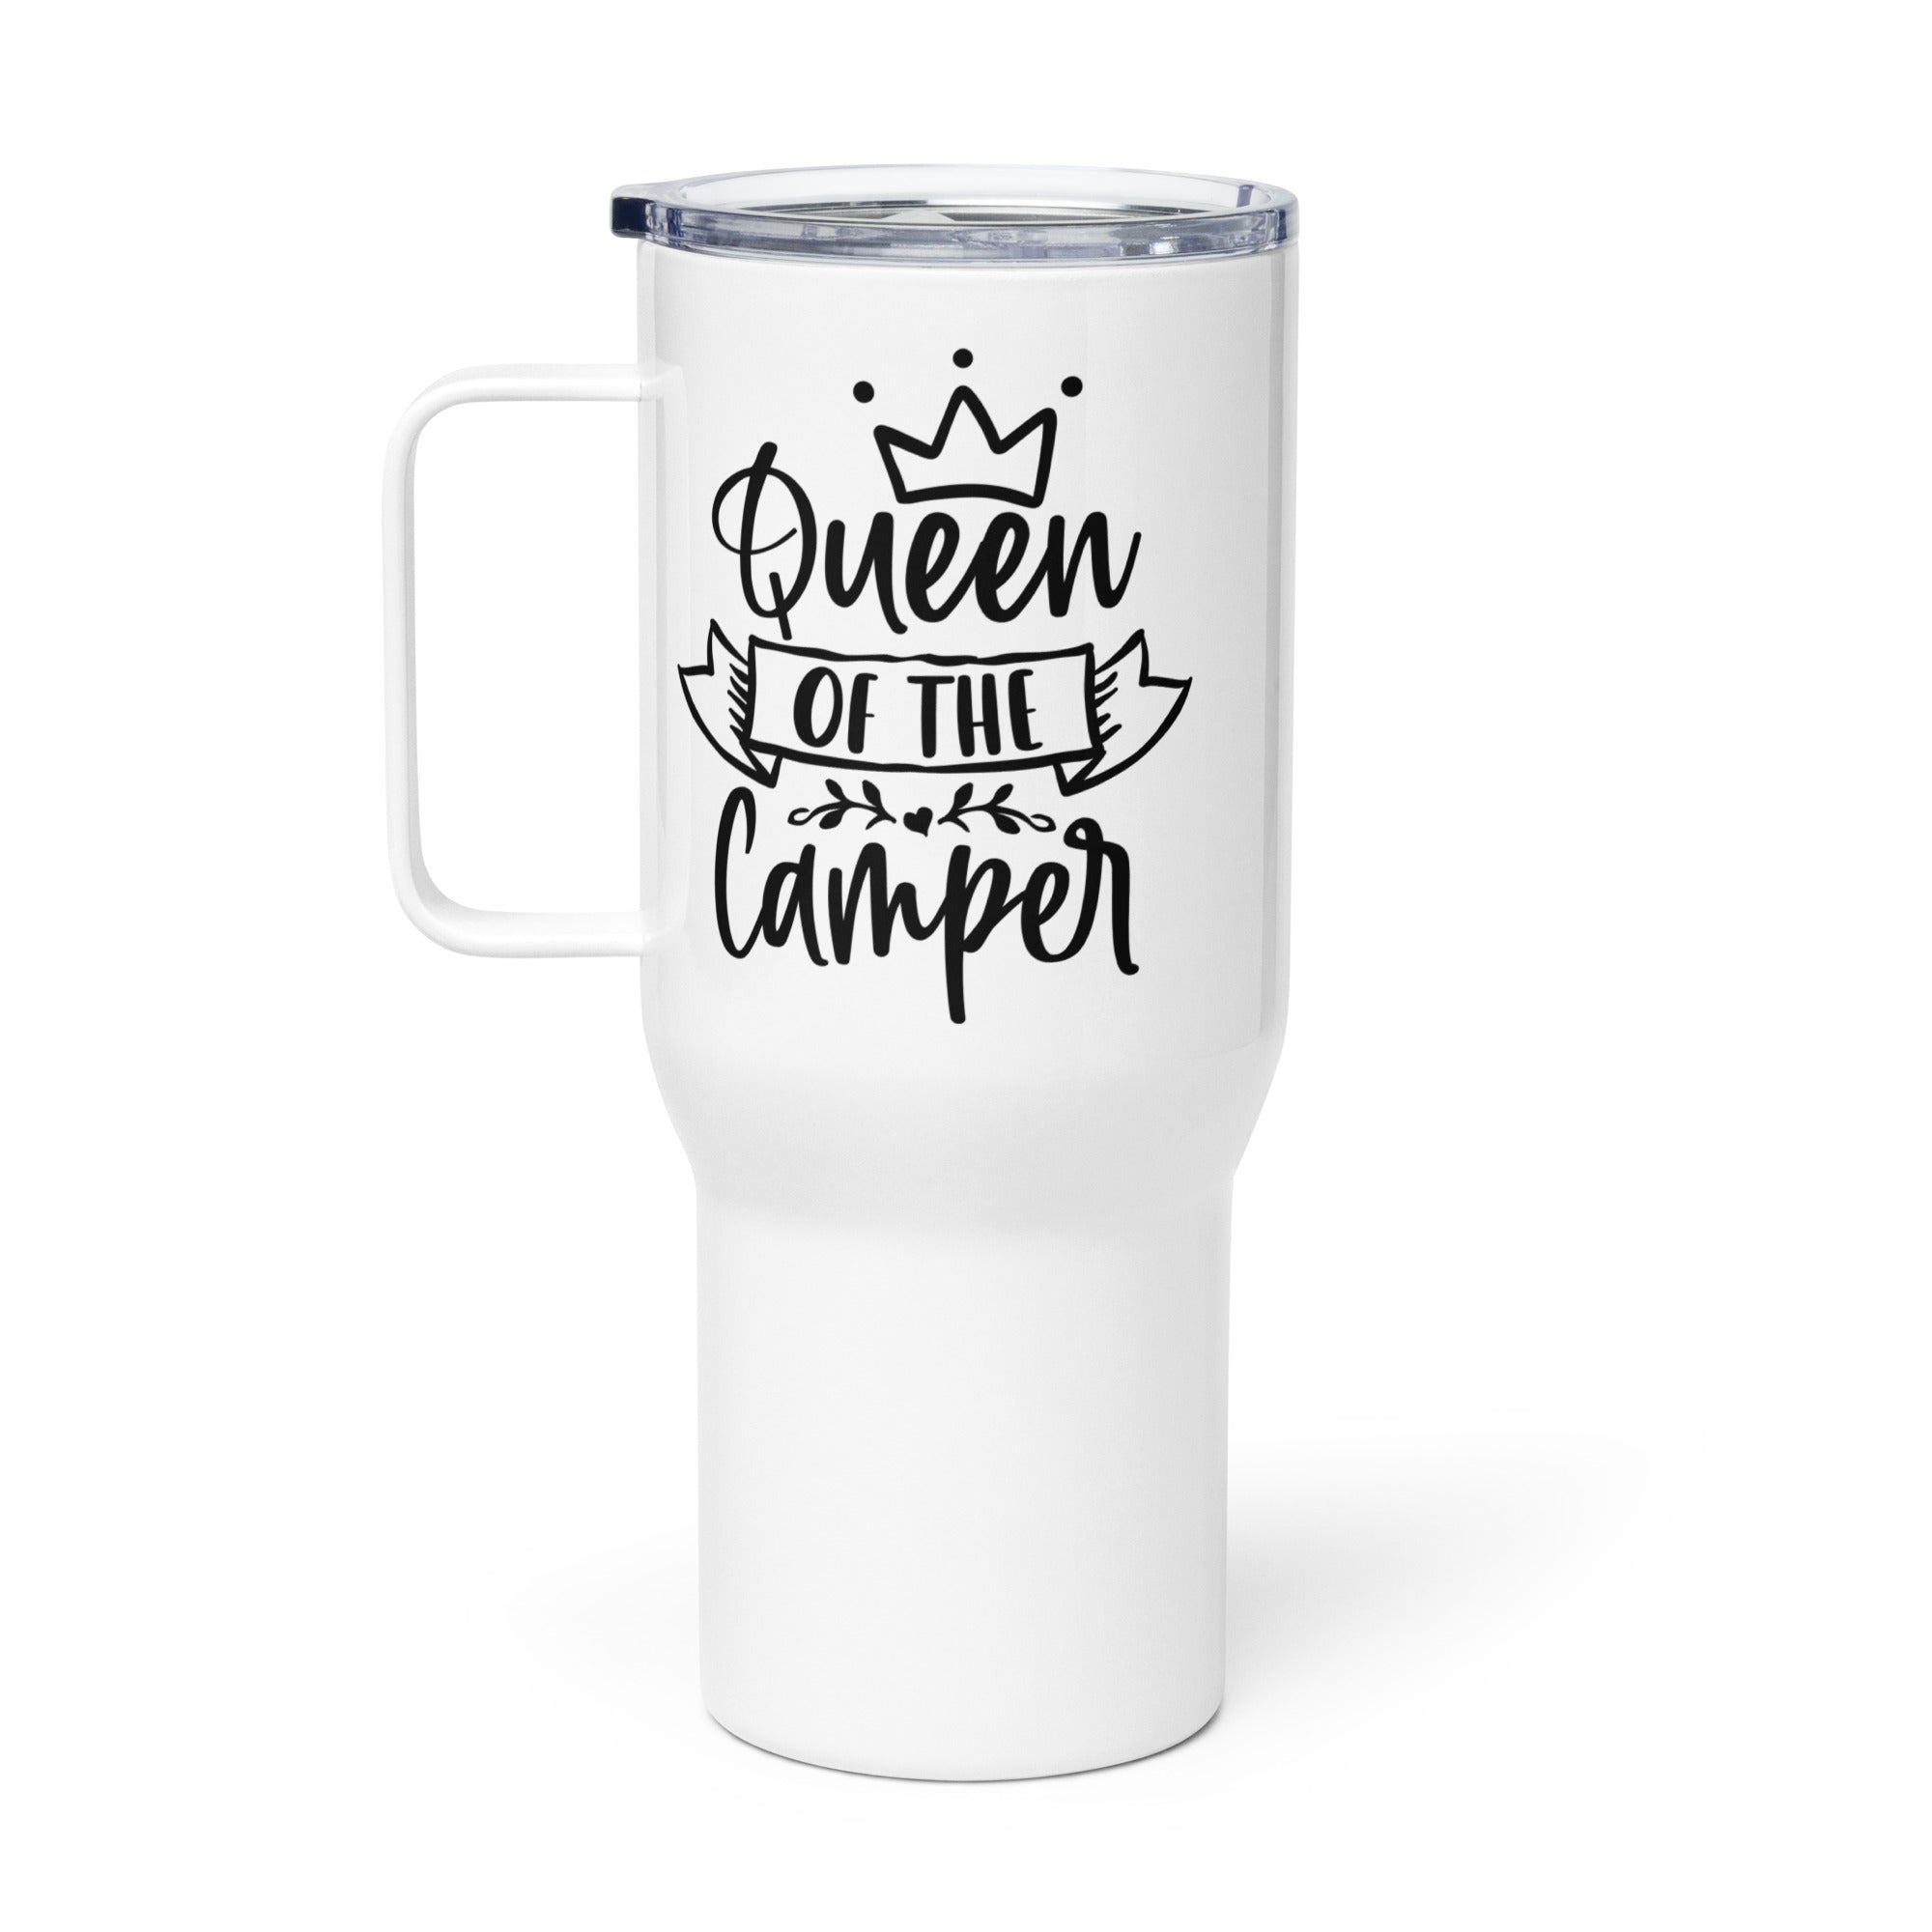 Queen of the Camper - Travel Mug